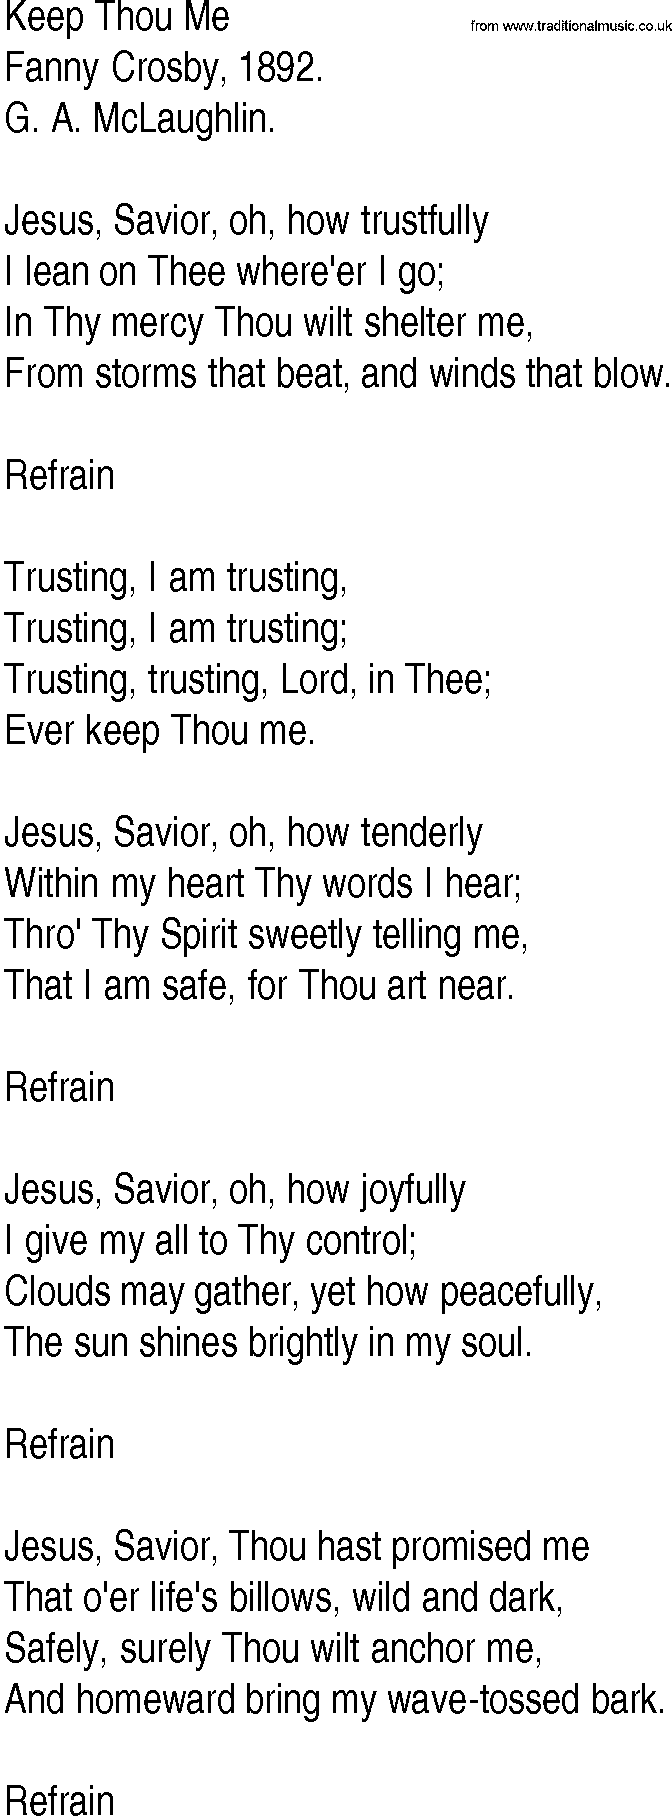 Hymn and Gospel Song: Keep Thou Me by Fanny Crosby lyrics